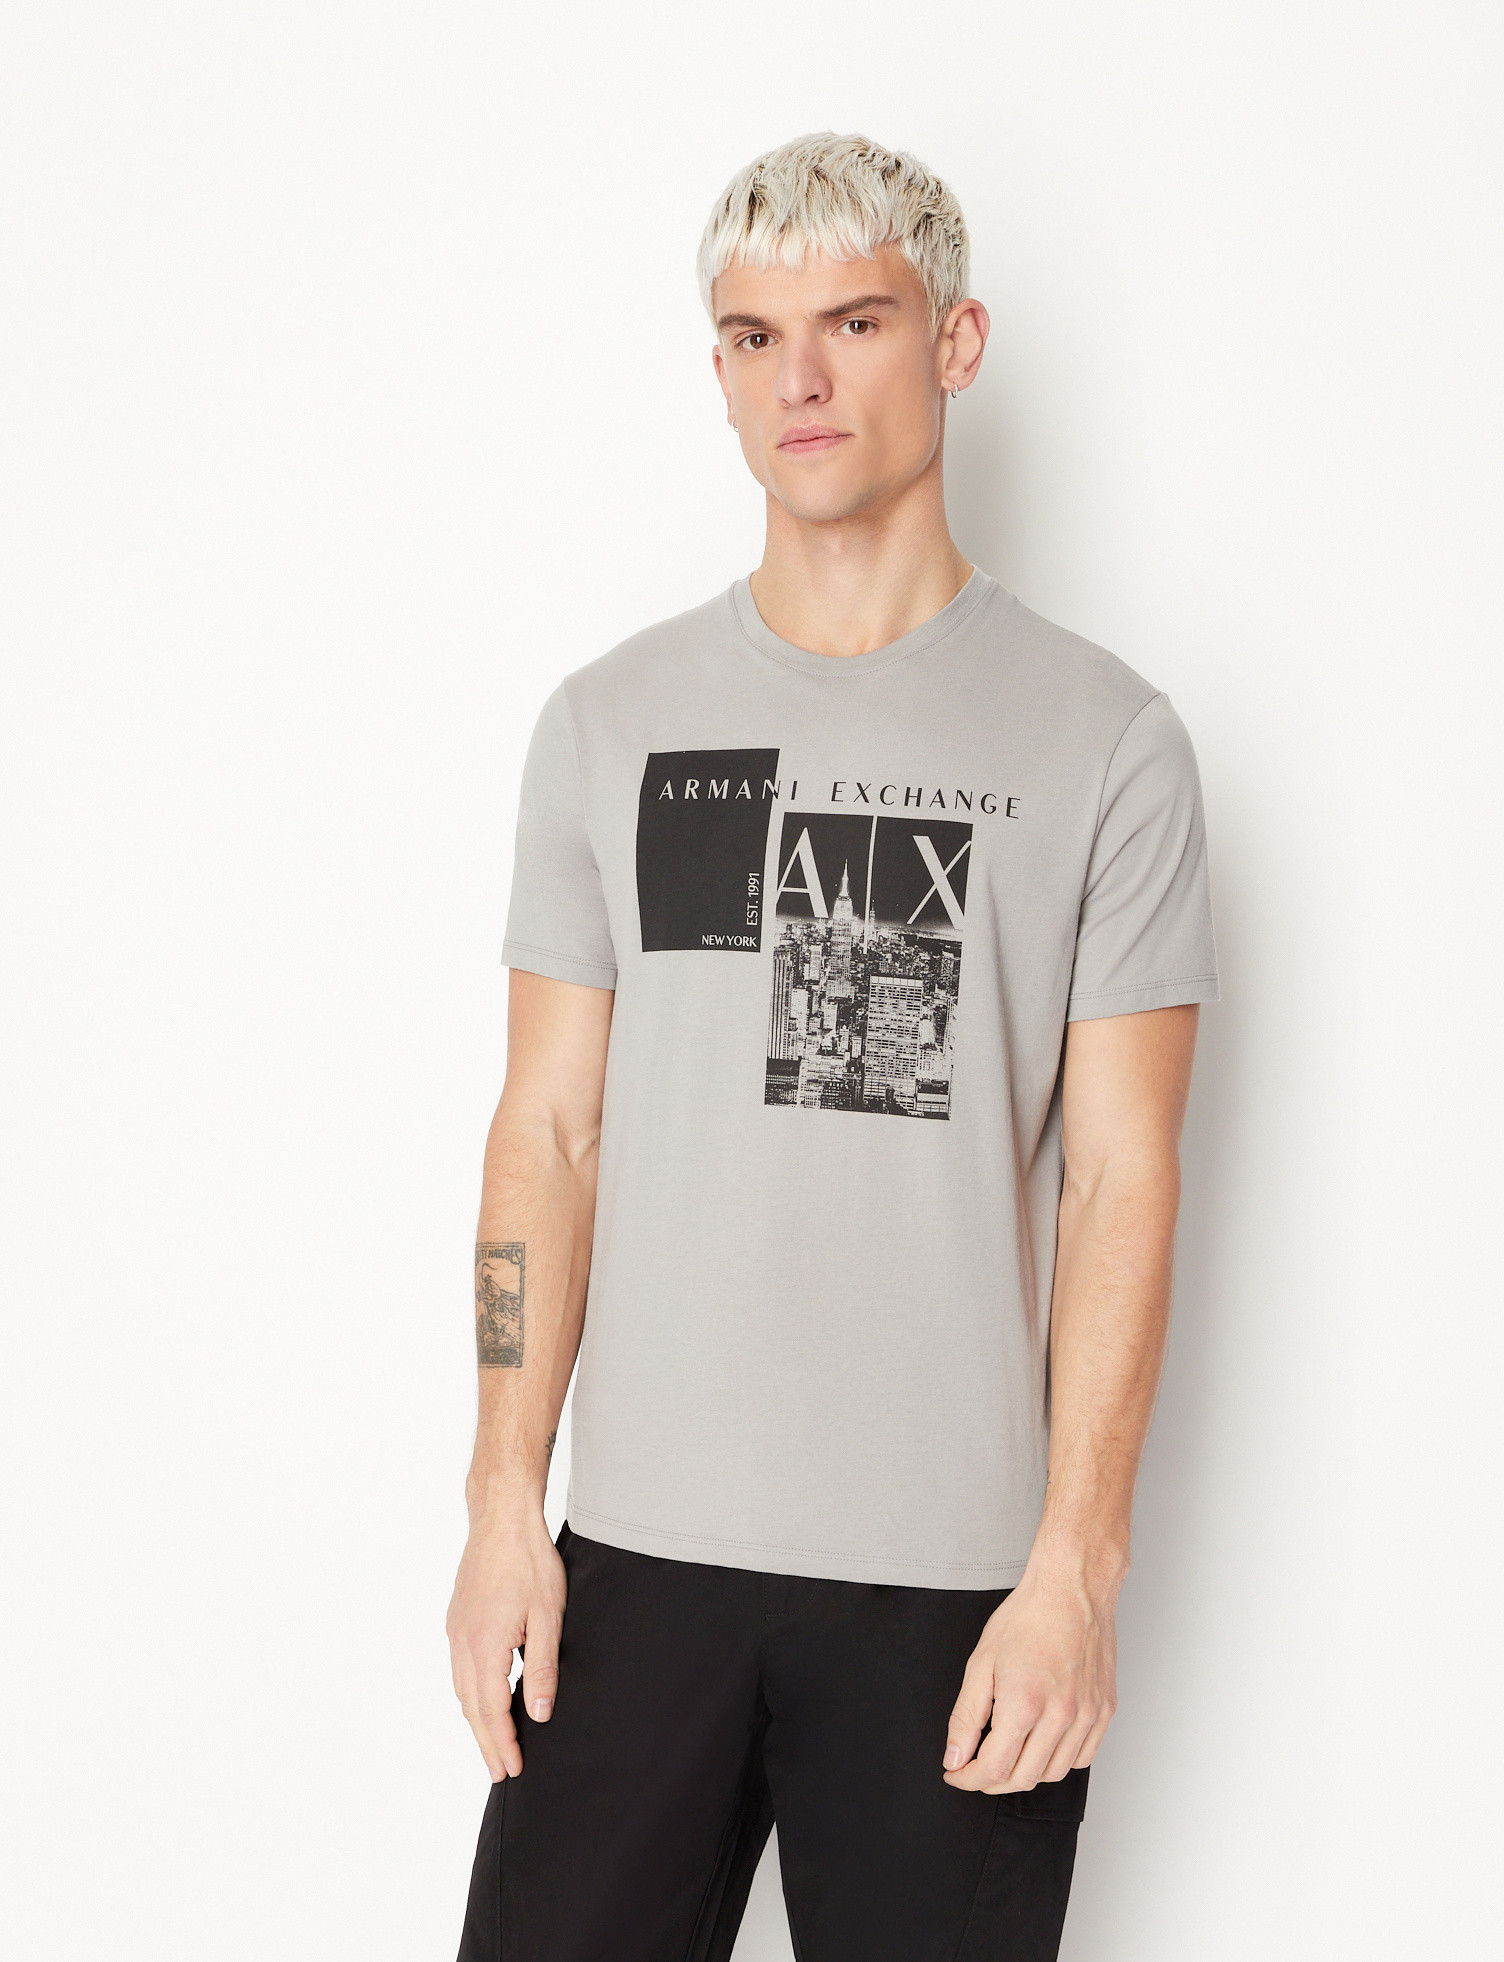 Armani Exchange - T-shirt con stampa grafica regular fit, Grigio scuro, large image number 1